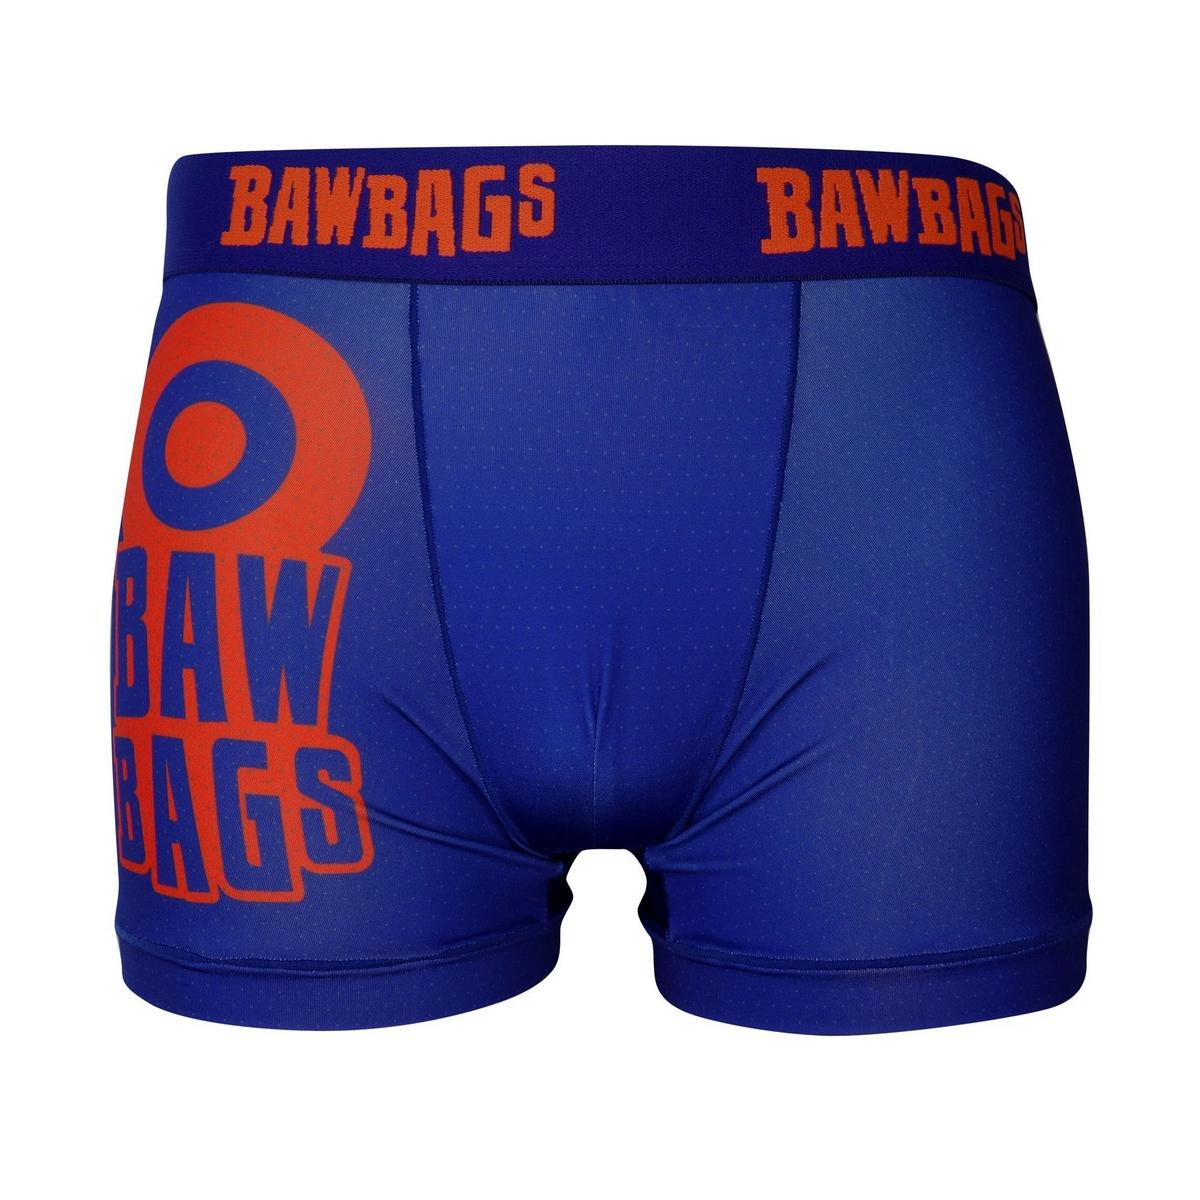 Bawbags Men's Bawler Triple Pack - Multi